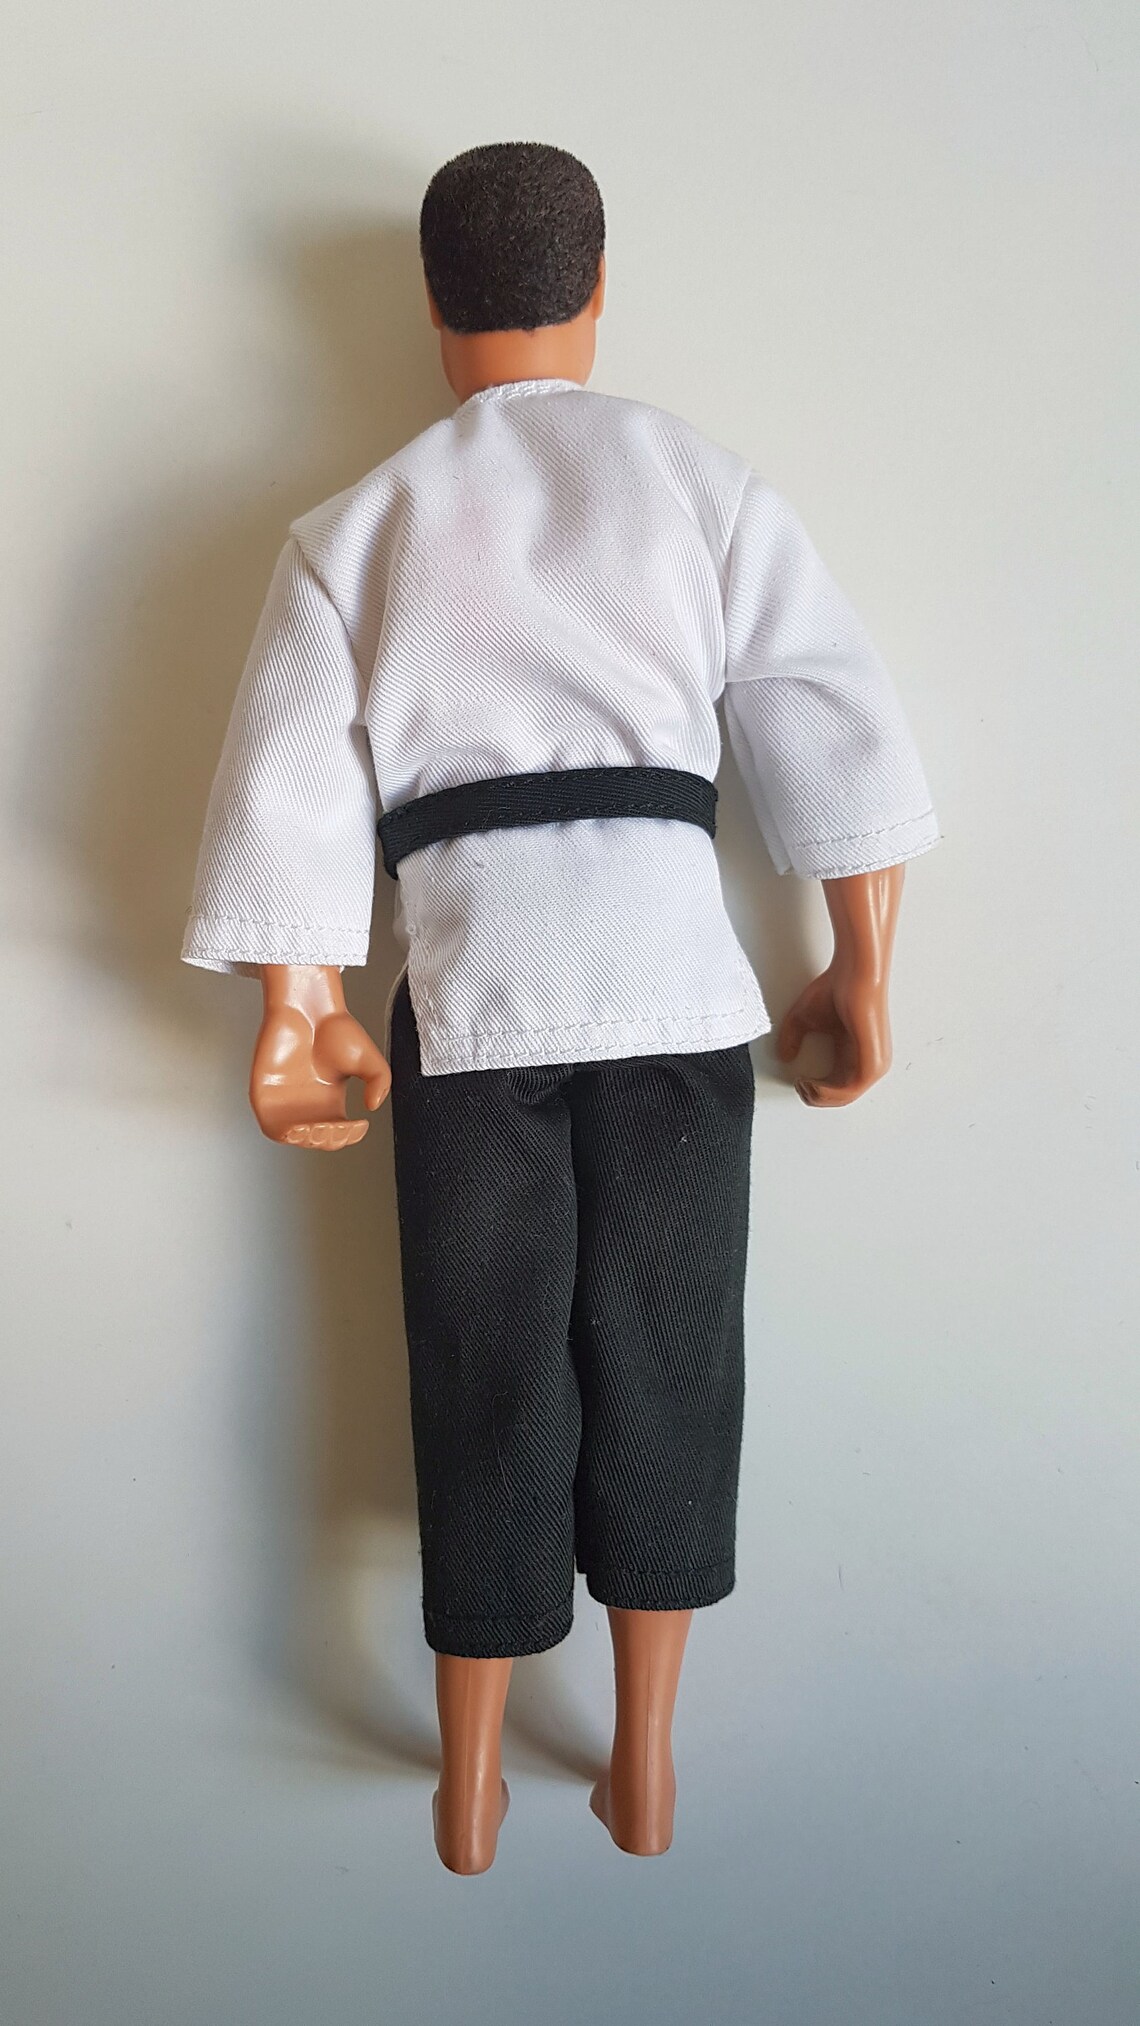 Vintage Hasbro Action Man martial arts doll | Etsy